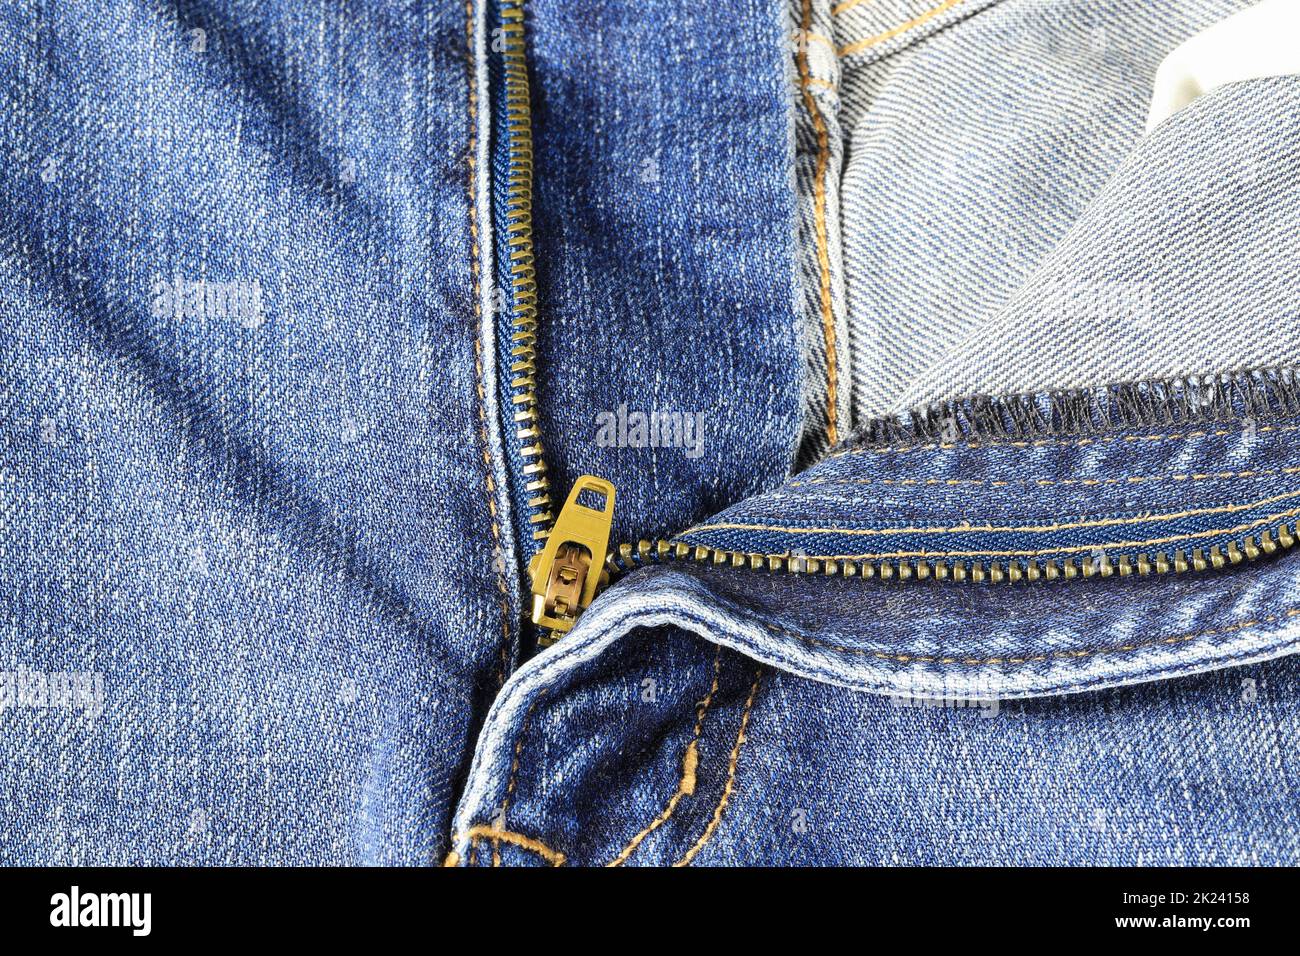 The open zipper of blue denim jeans open, Closeup view of blue jeans with zipper. Stock Photo